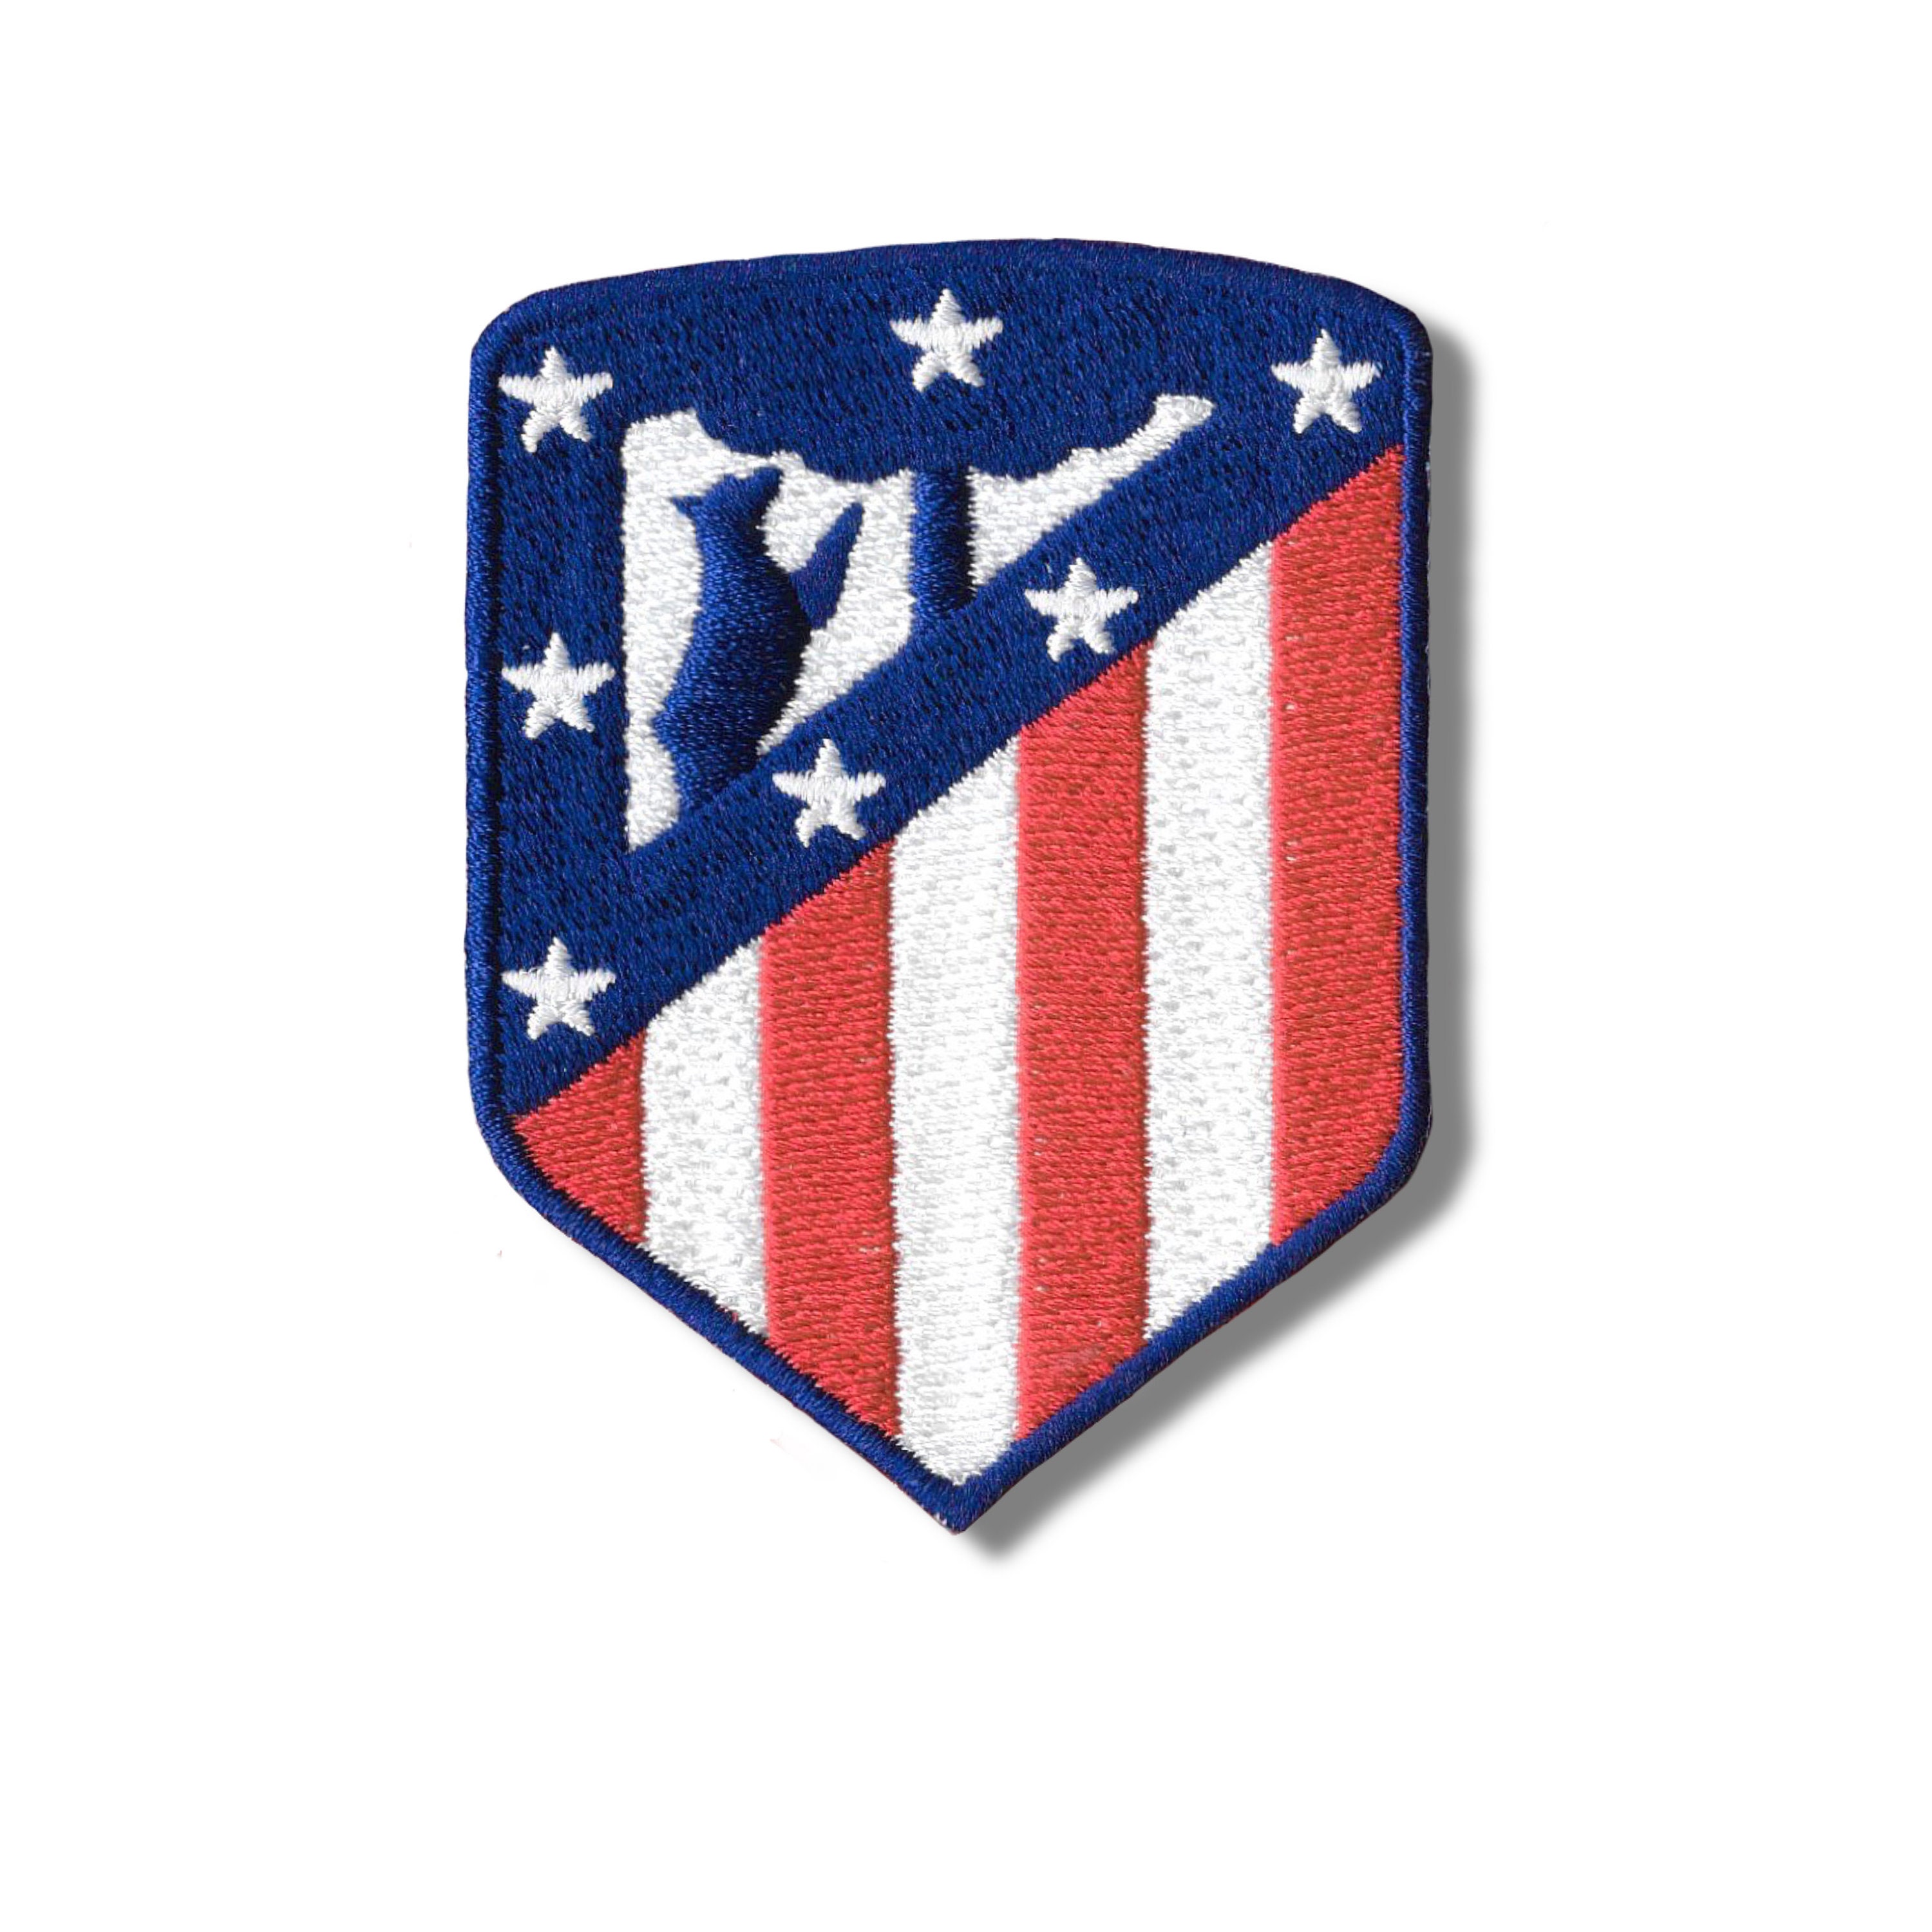 File:Bandera del Club Atlético Platense.png - Wikimedia Commons